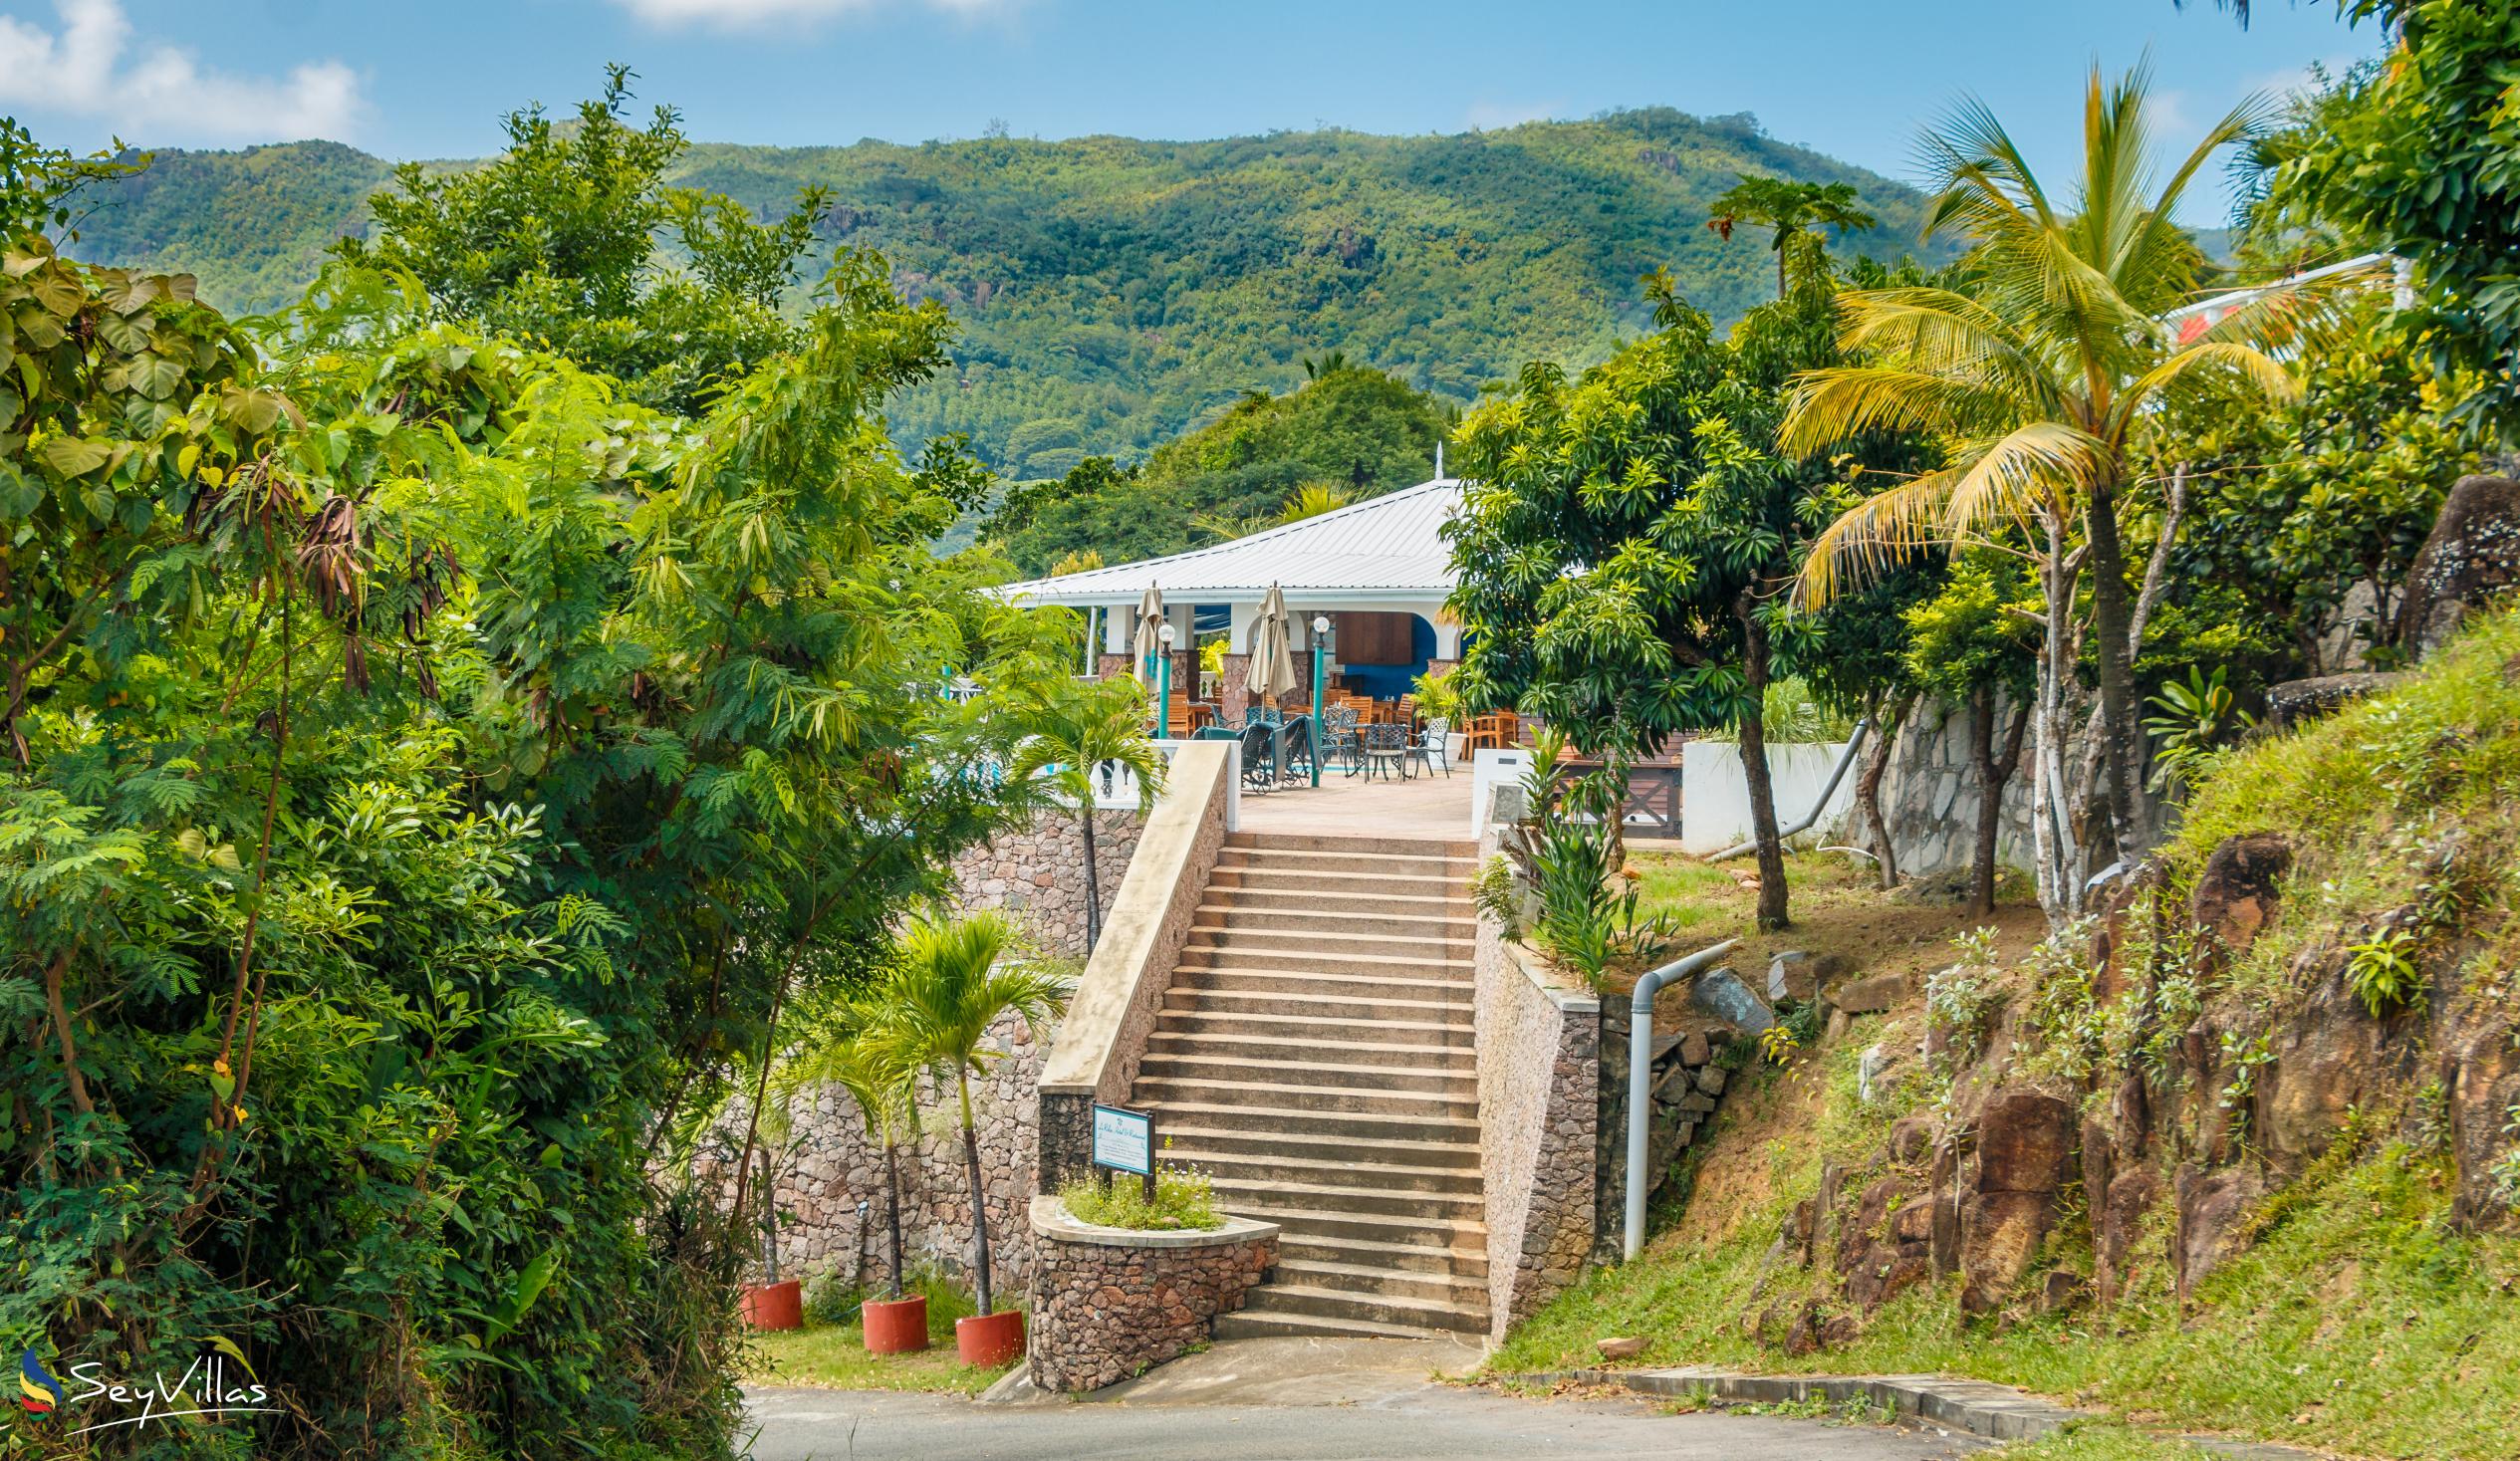 Foto 23: Villa Bel Age - Lage - Mahé (Seychellen)